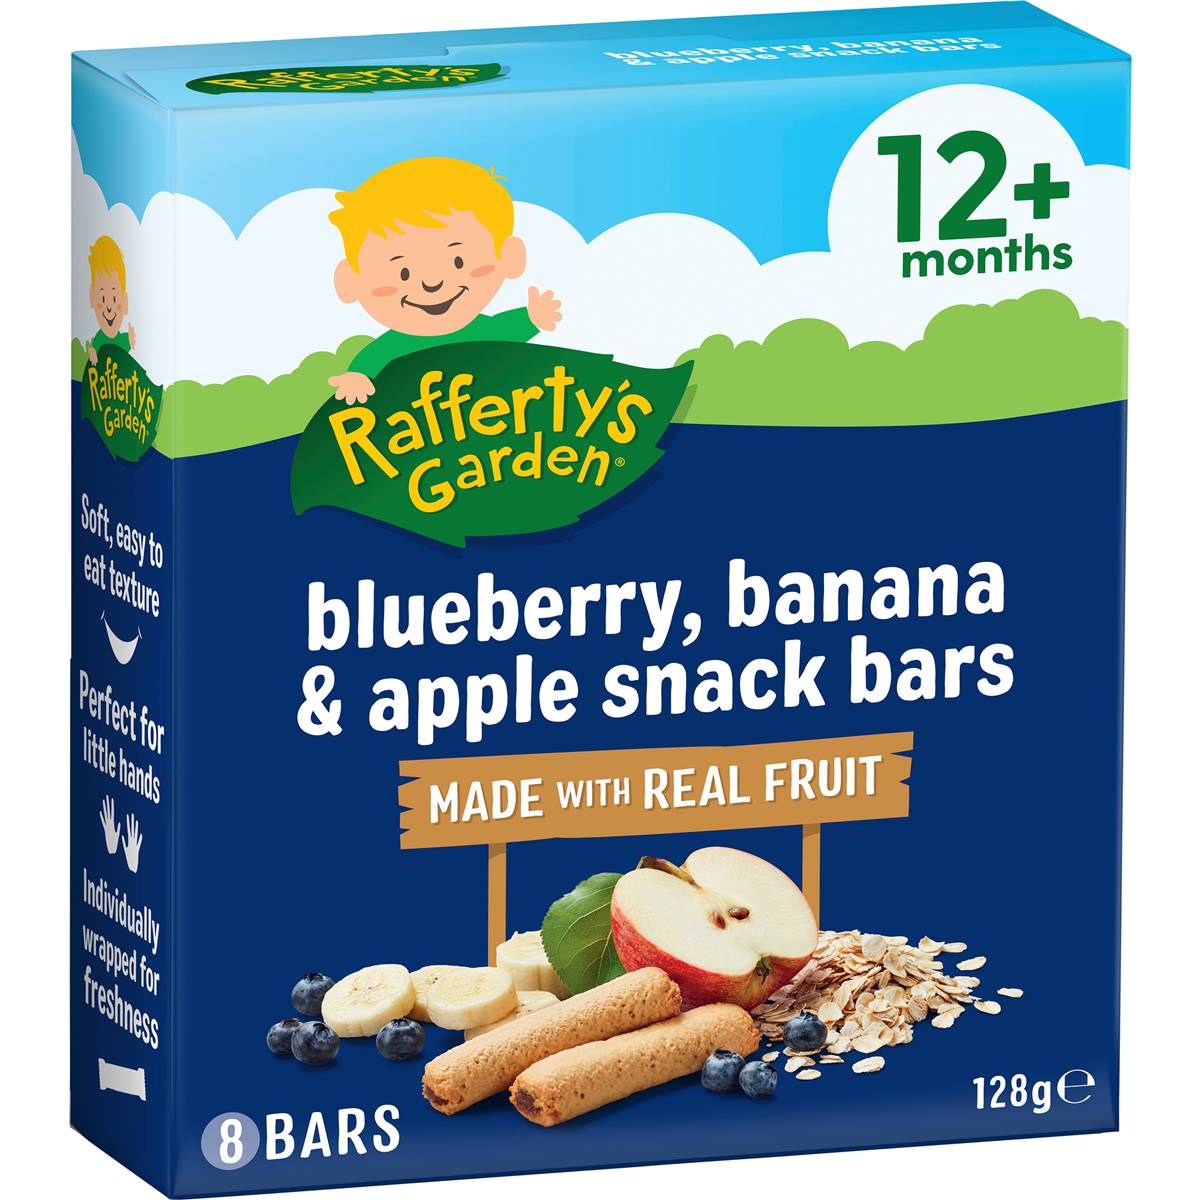 Calories in Rafferty's Garden Baby Food Blueberry, Banana & Apple Snack Bars 12+ Months